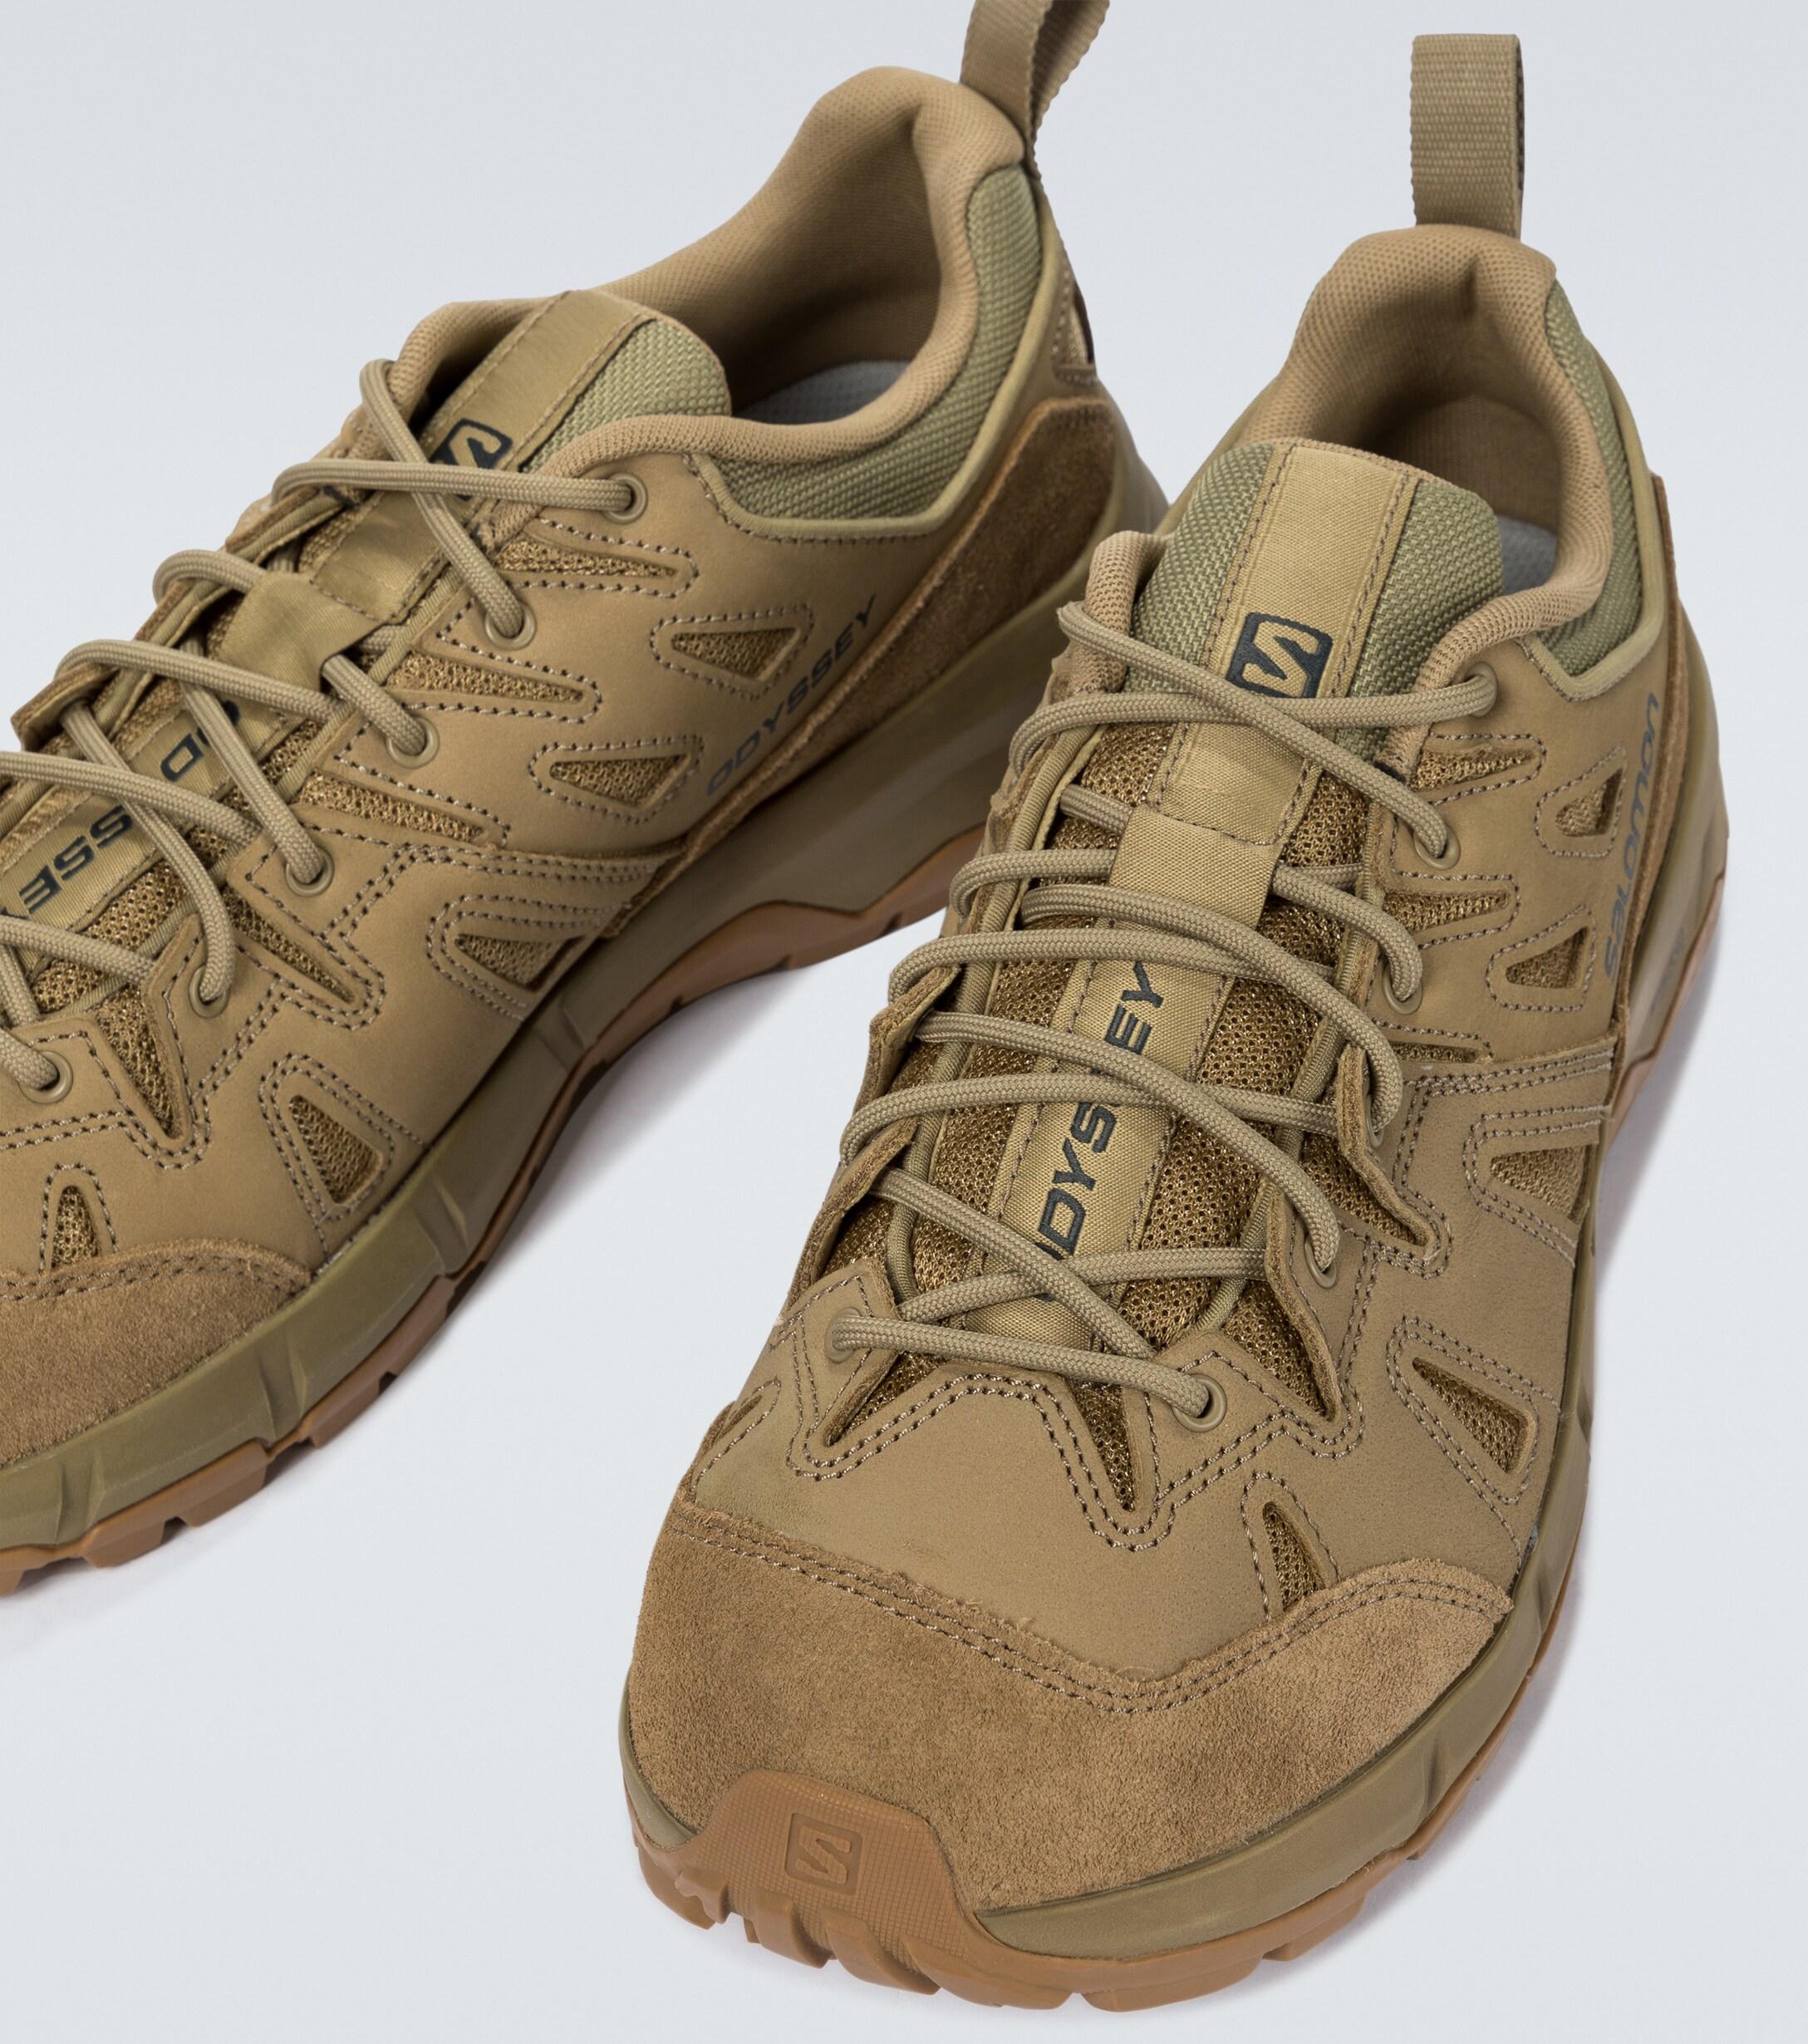 Salomon Odyssey Advanced Sneakers in Beige (Natural) for Men - Lyst